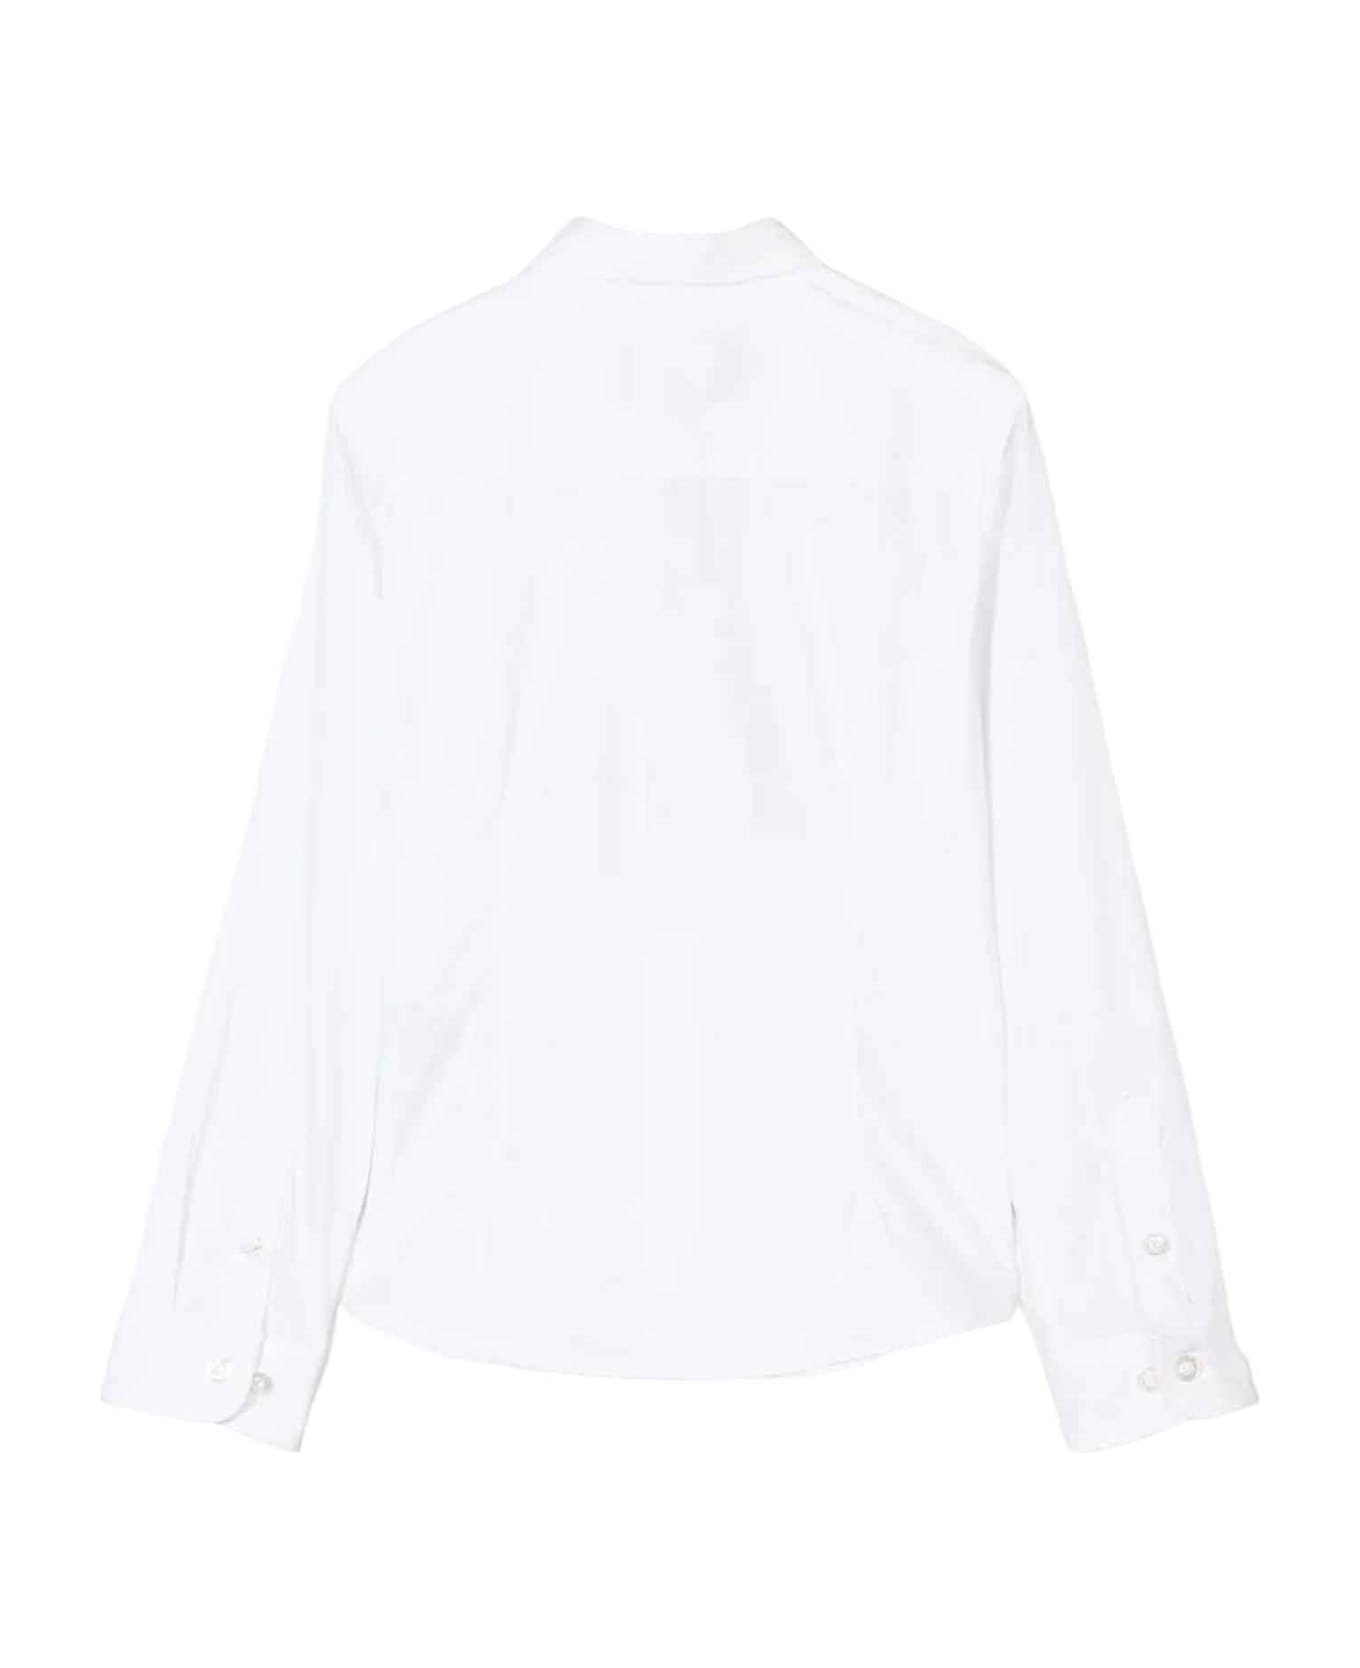 Emporio Armani White Shirt Boy - Bianco ottico シャツ